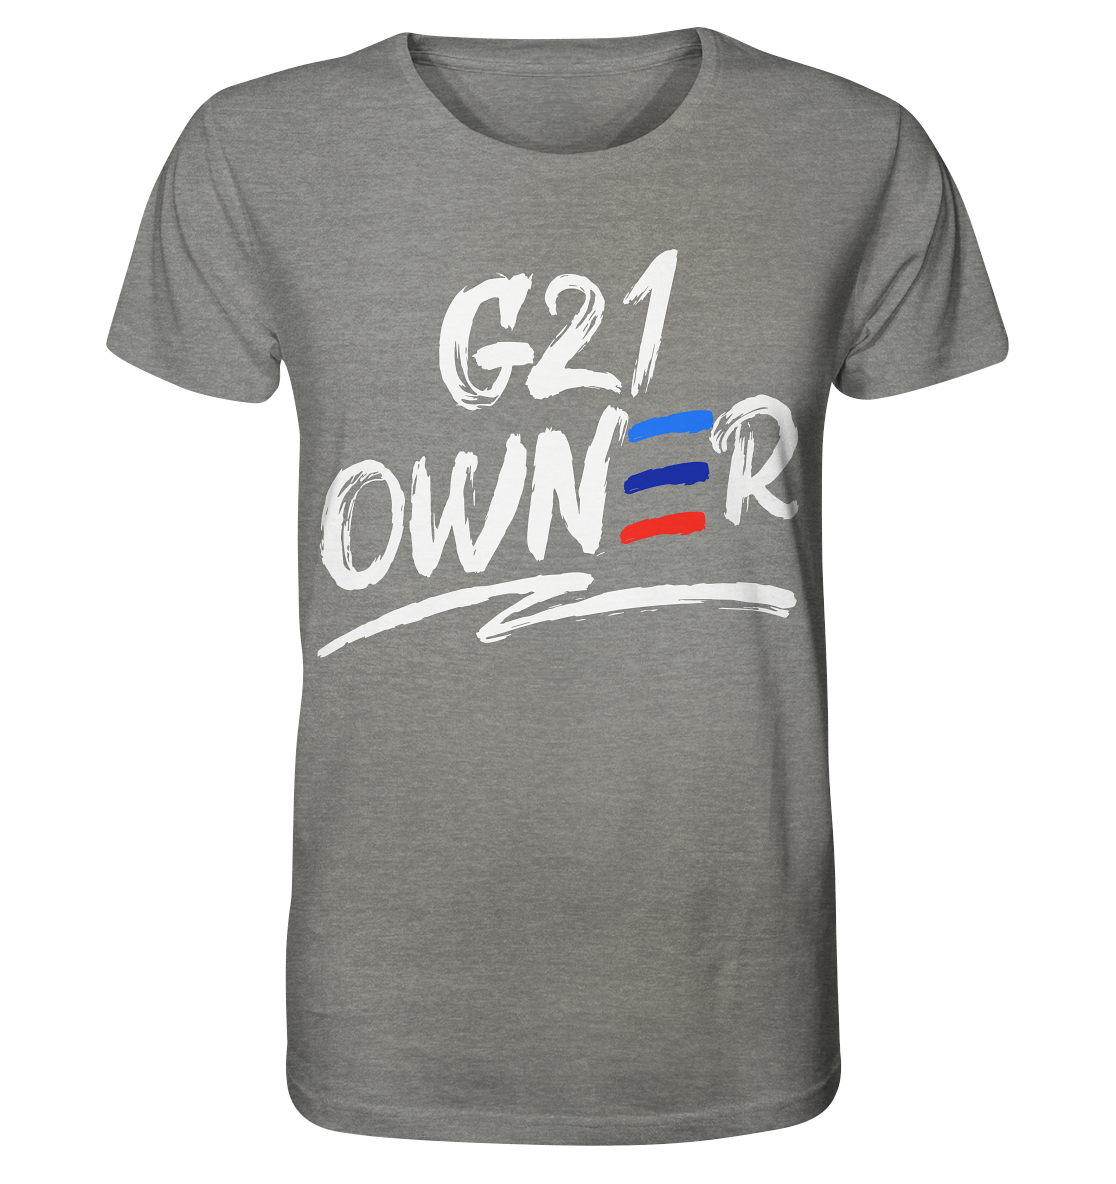 COD_BGKG21OWNER - Organic Shirt